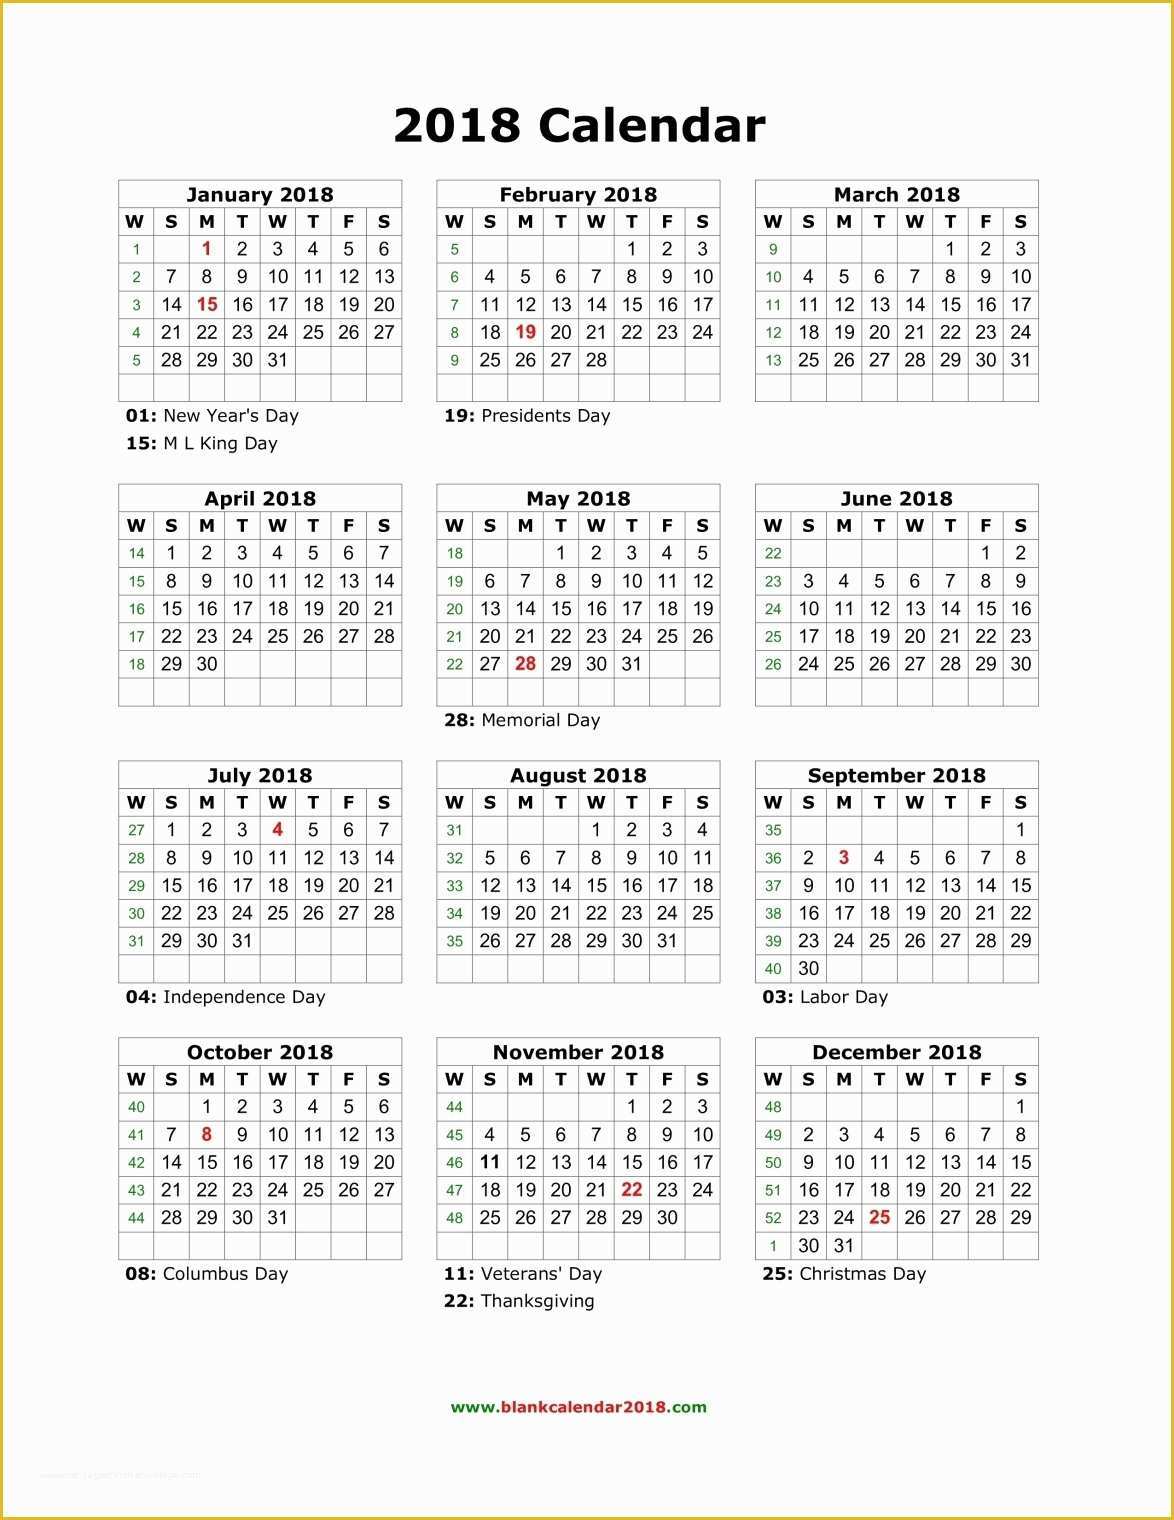 Calendar Template Free 2018 Of Blank Calendar 2018